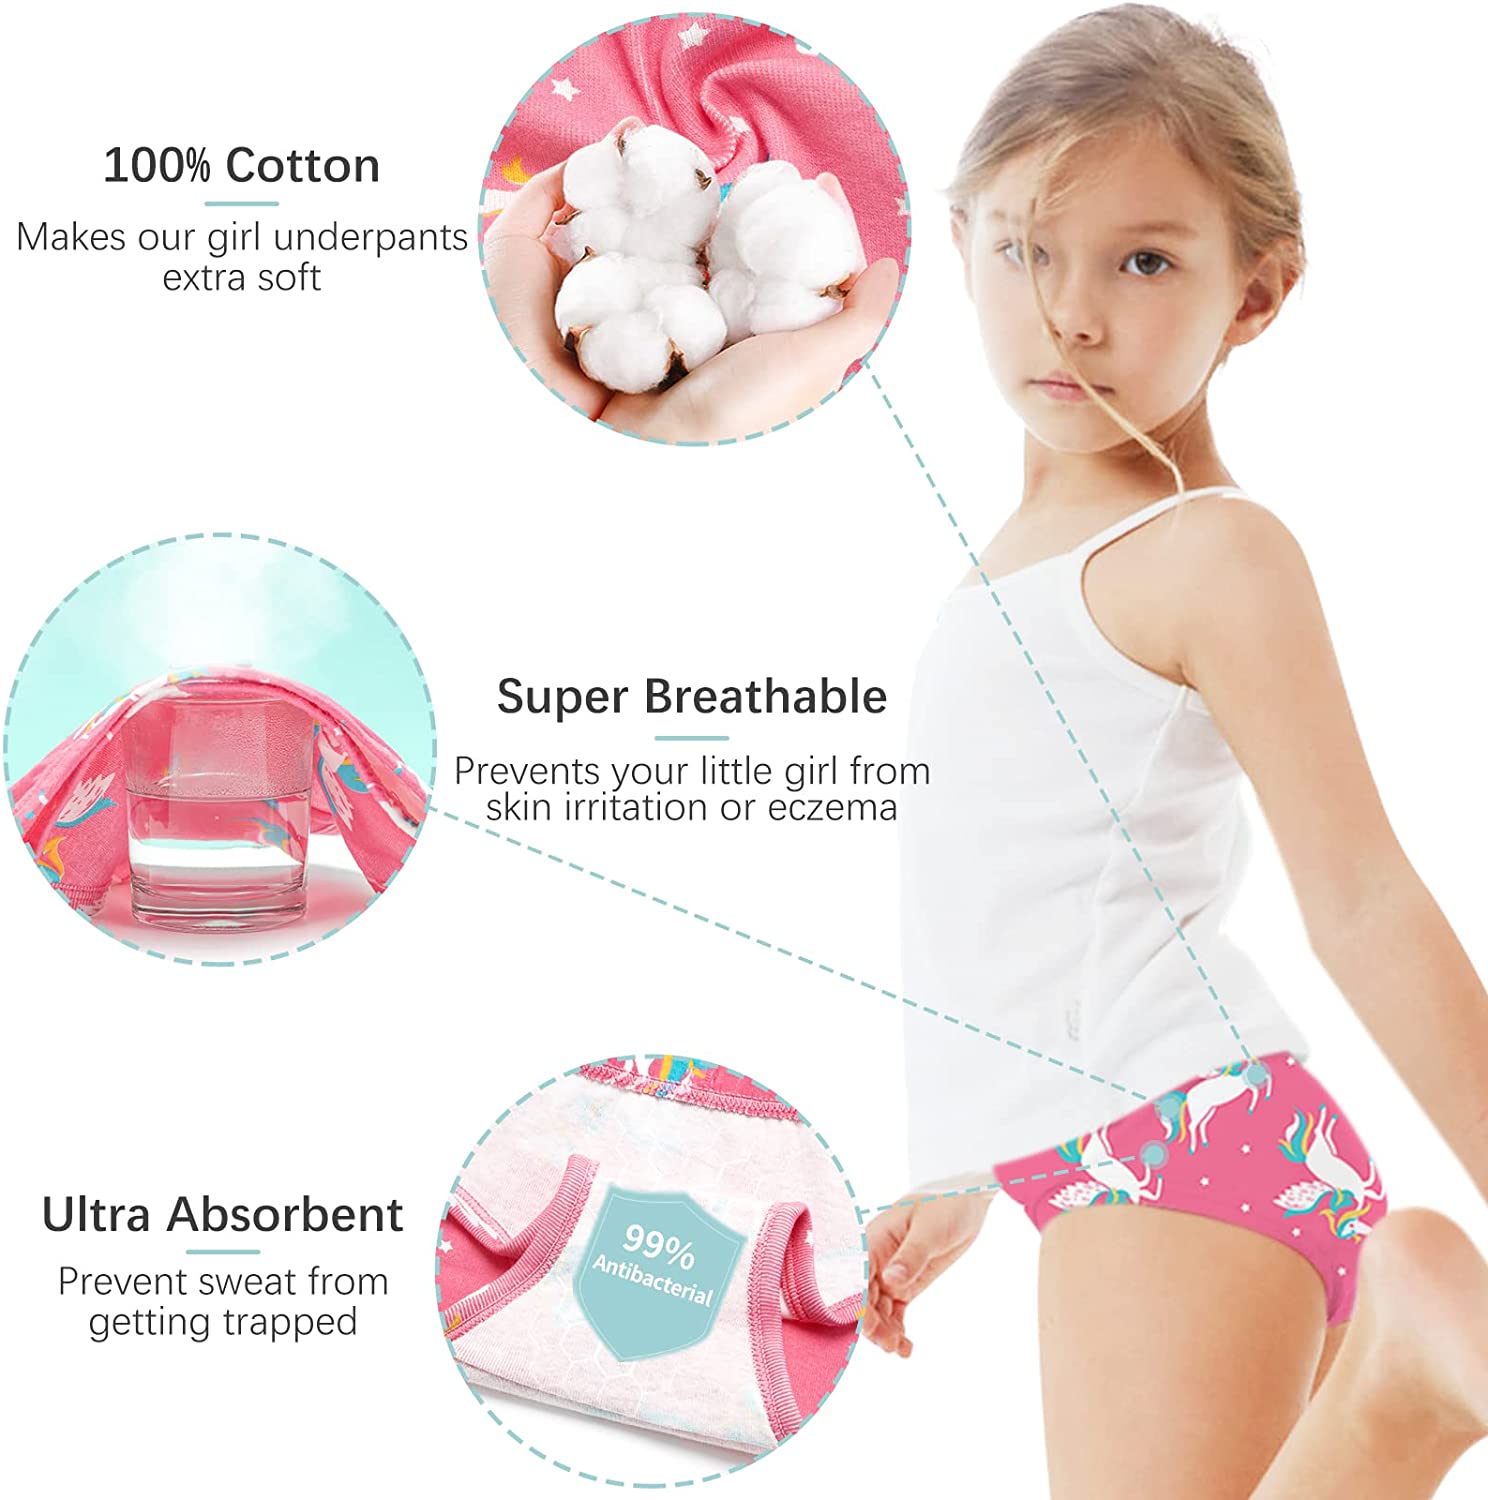 6-Pack Girls 100% Cotton Unicorn Print Comfort & Breathable